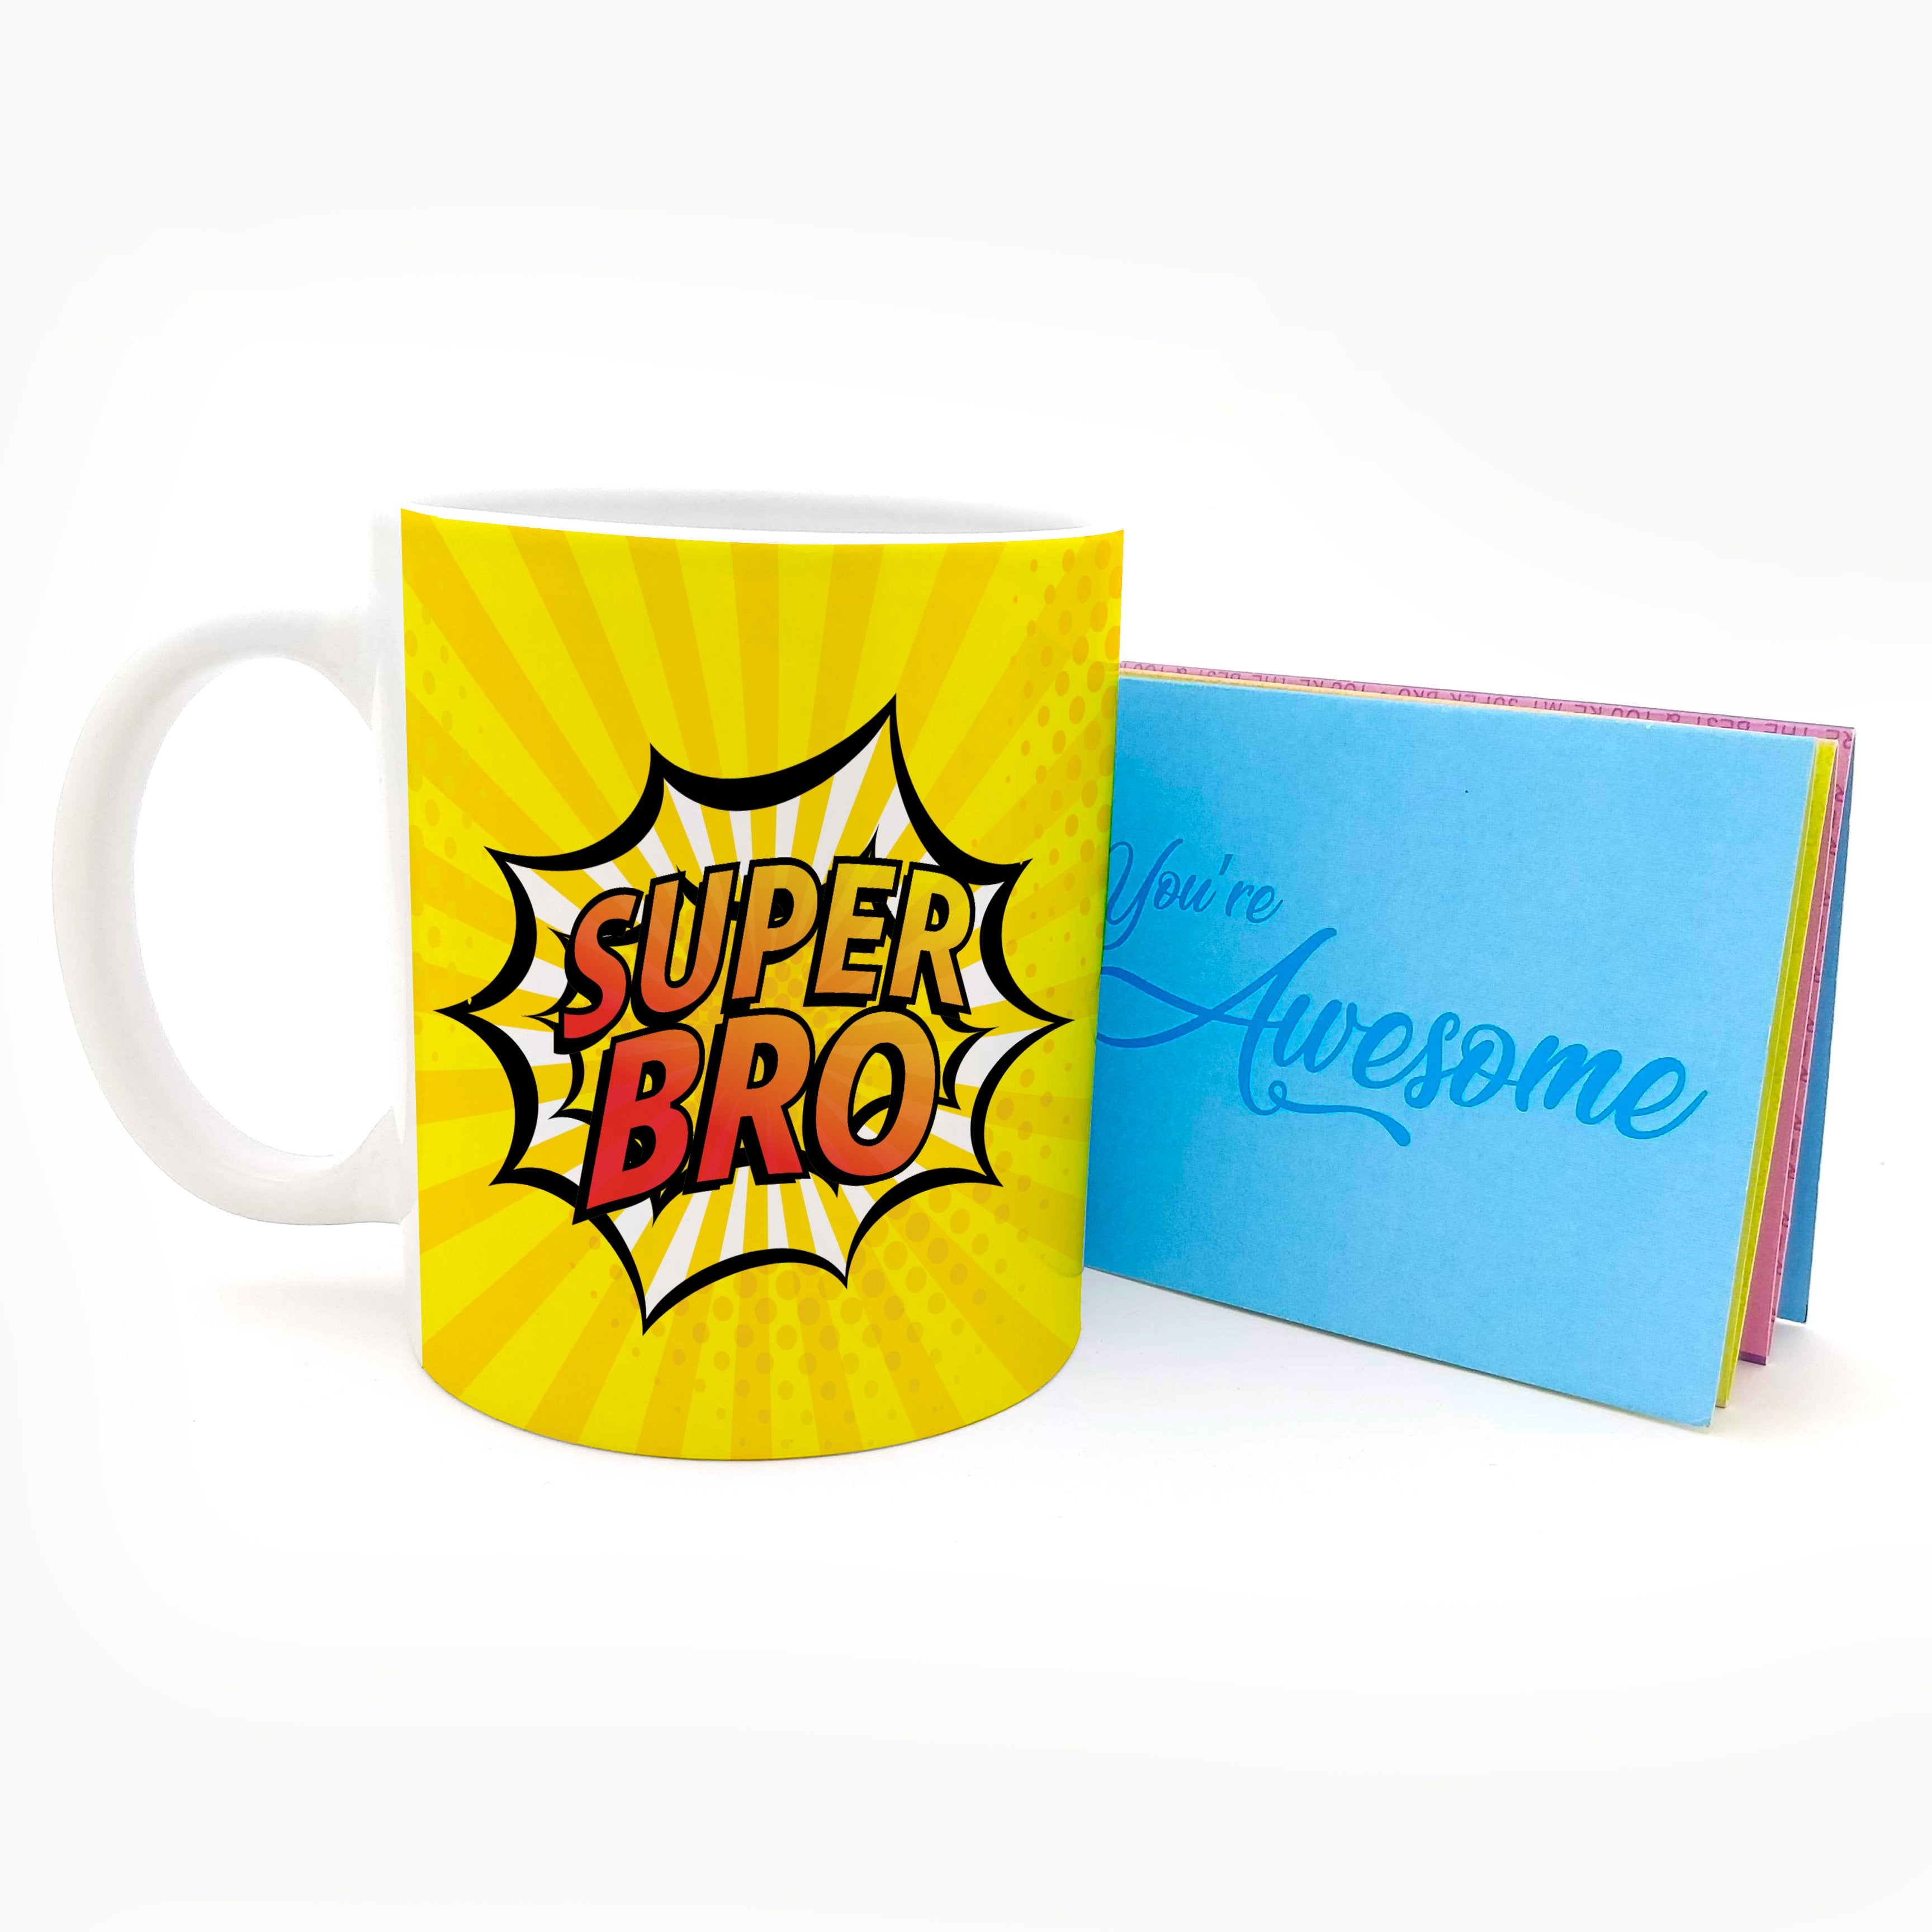 Super Bro - Comic Style Ceramic Mug & Card